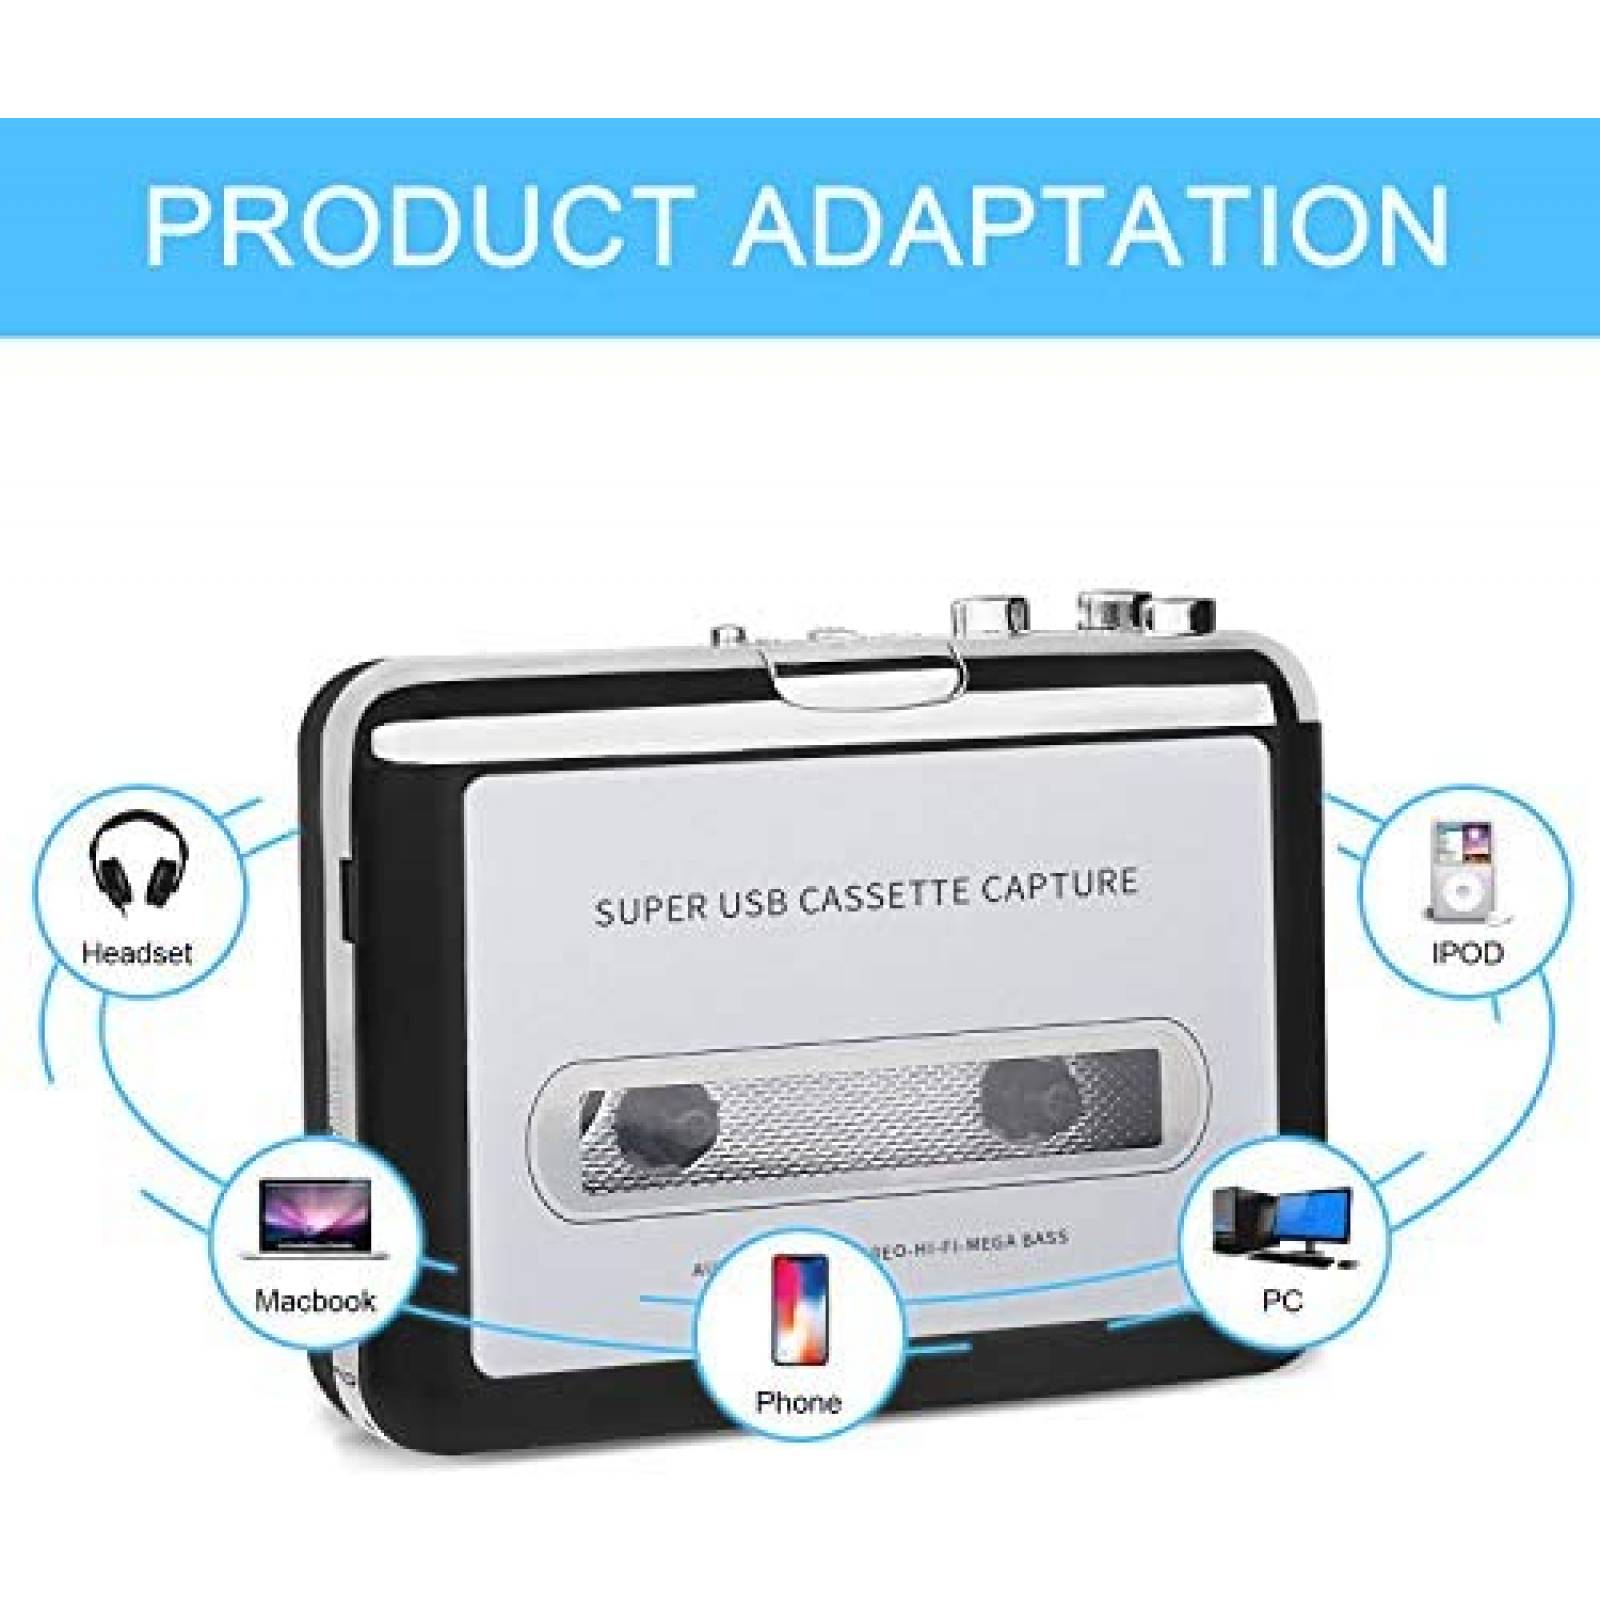 Reproductor de cassette, convertidor de cinta de casete a MP3, a través del  convertidor de cinta de casete portátil USB, captura música de audio MP3